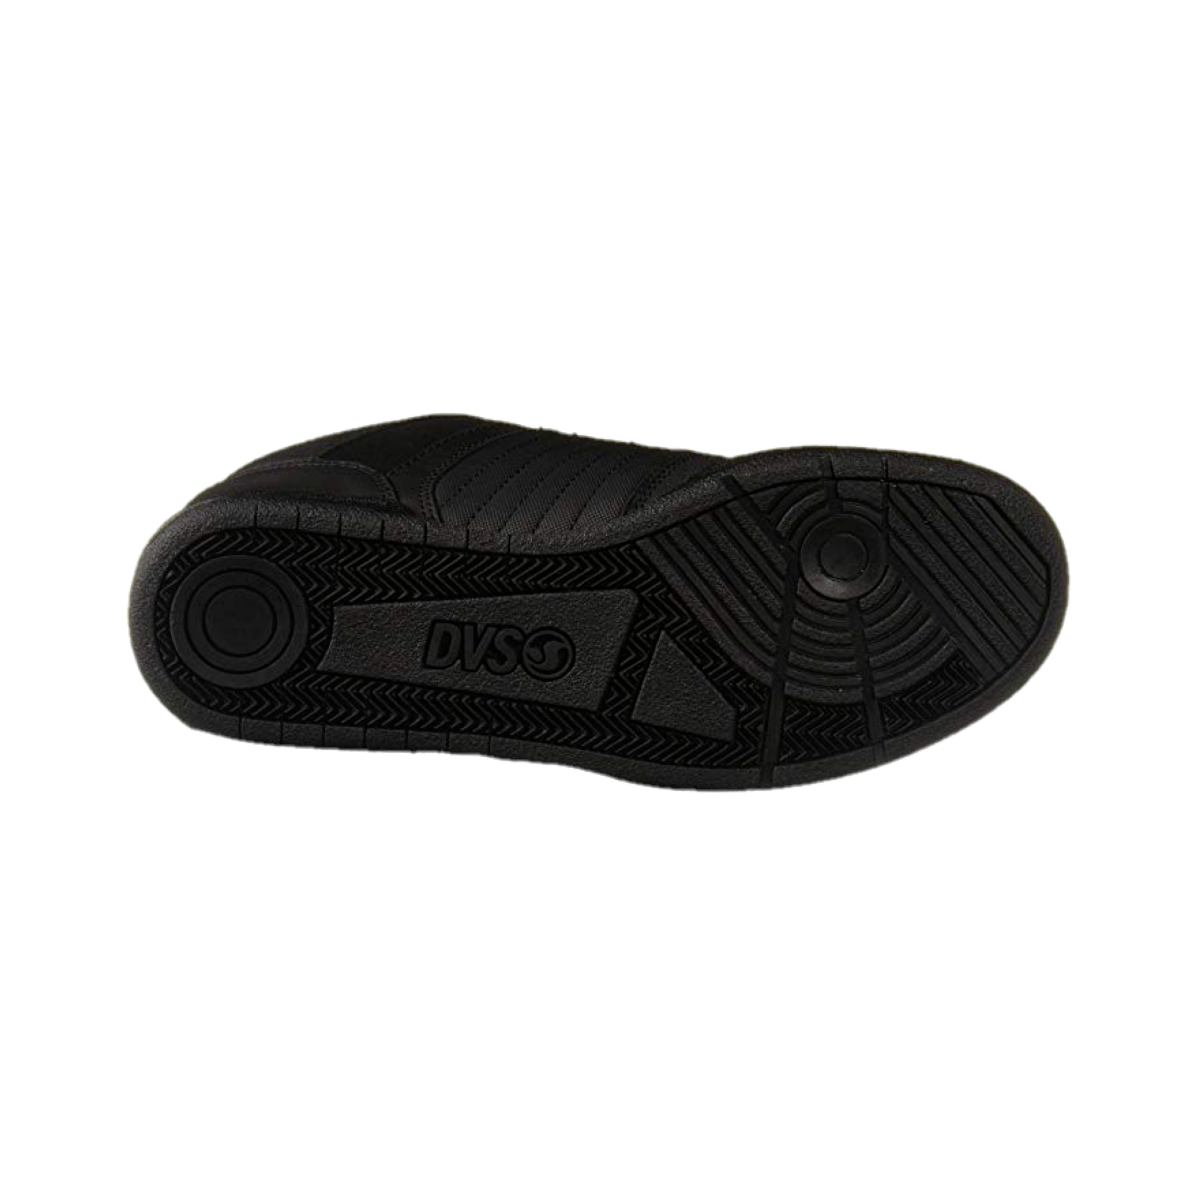 DVS F0000233019 CELSIUS MN'S (Medium) Black/Black Suede/Leather/Nubuck Skate Shoes